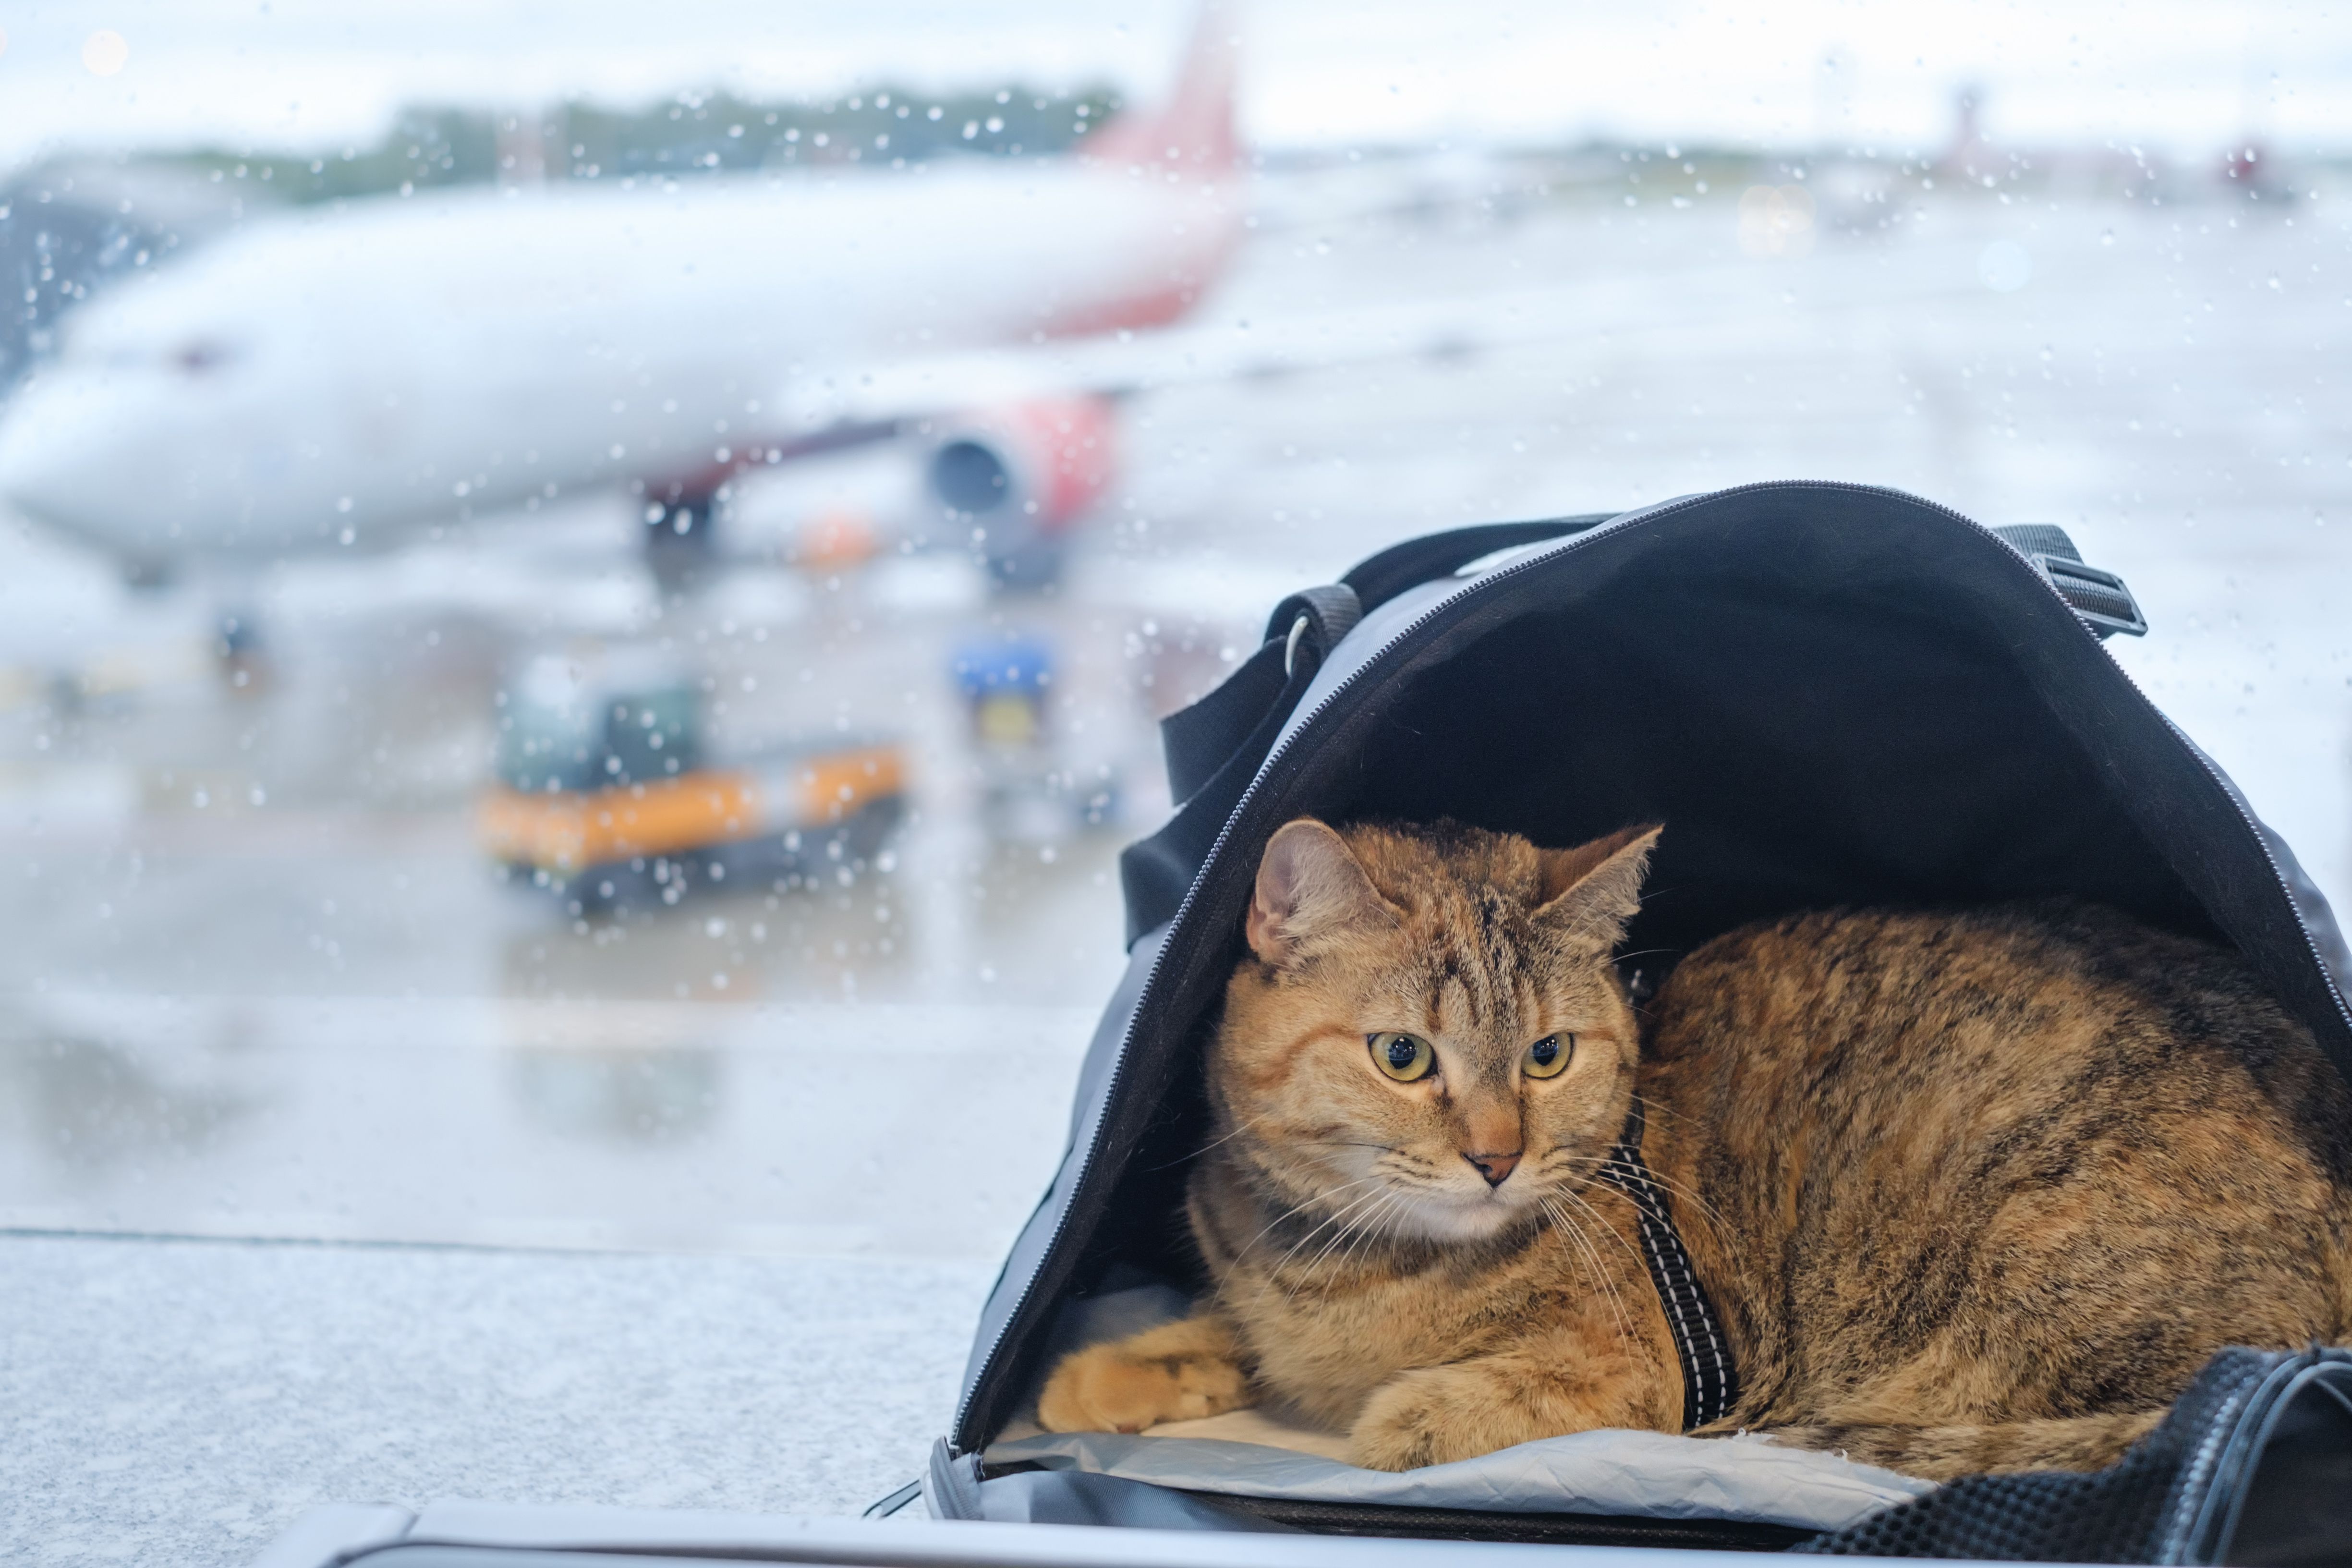 A cat sitting in a bag near an airport terminal window.